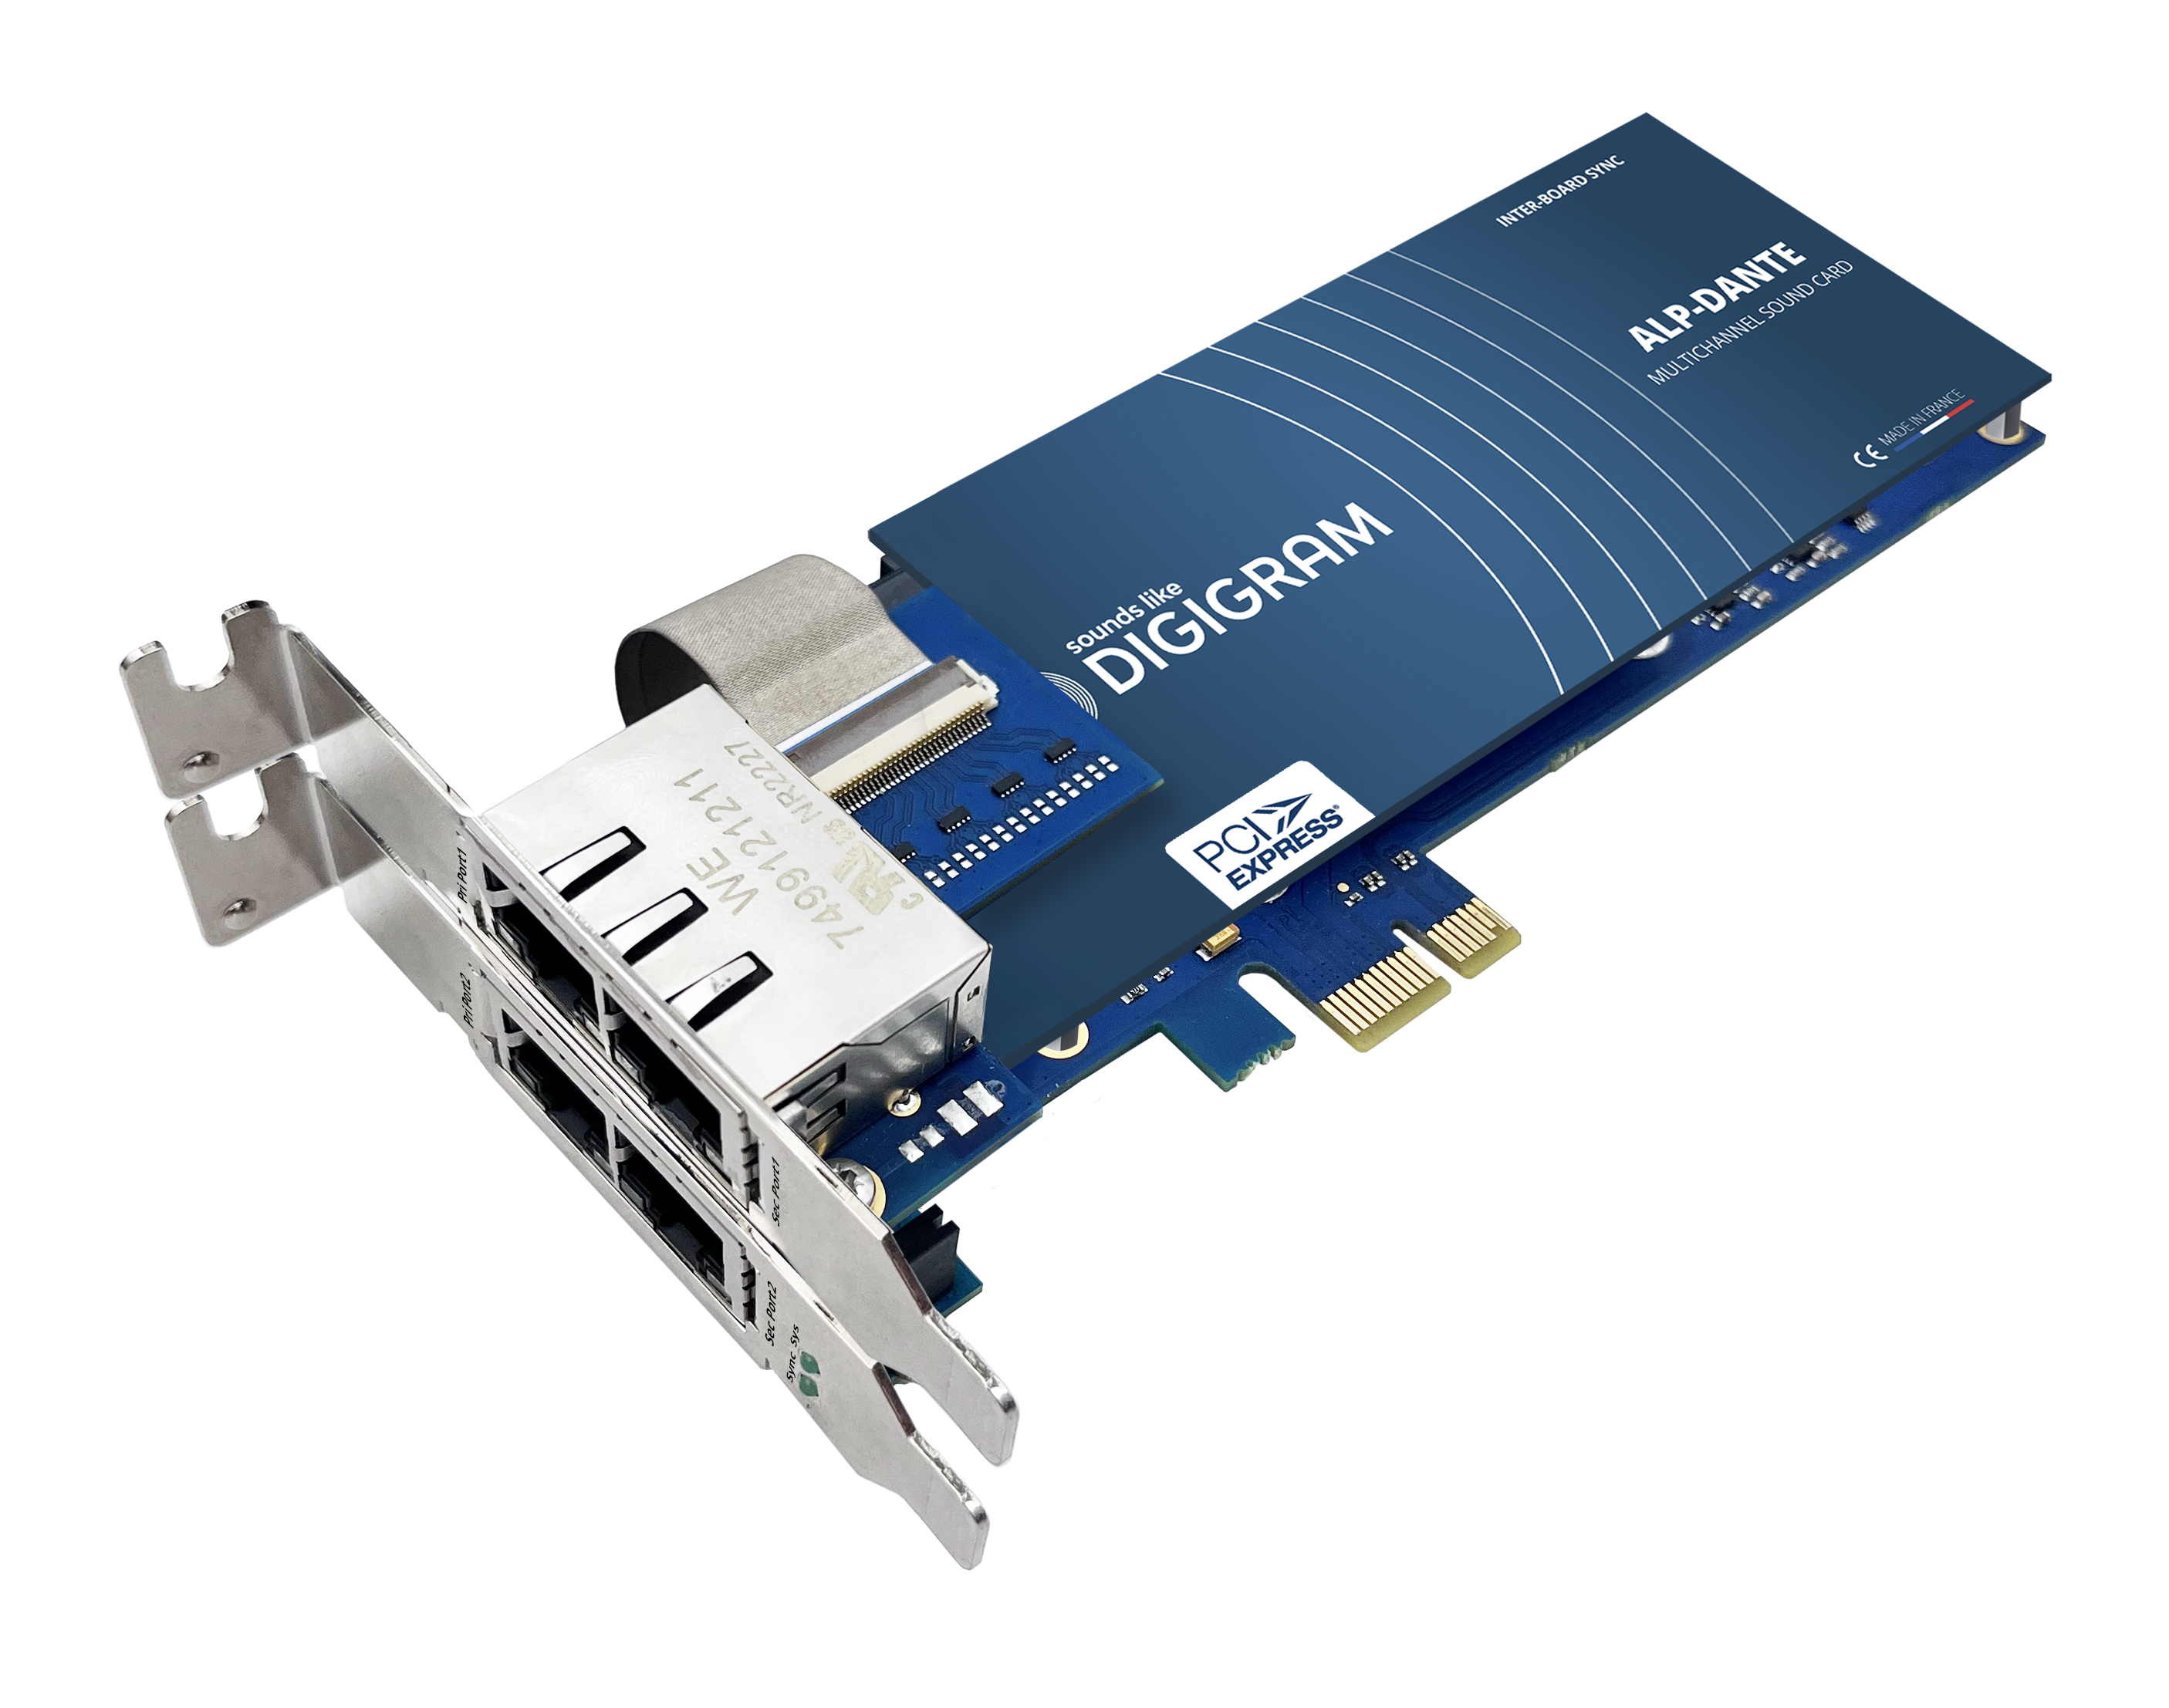 ALP-DANTE PCIe SOUND CARD - Smart and ultra versatile - Digigram